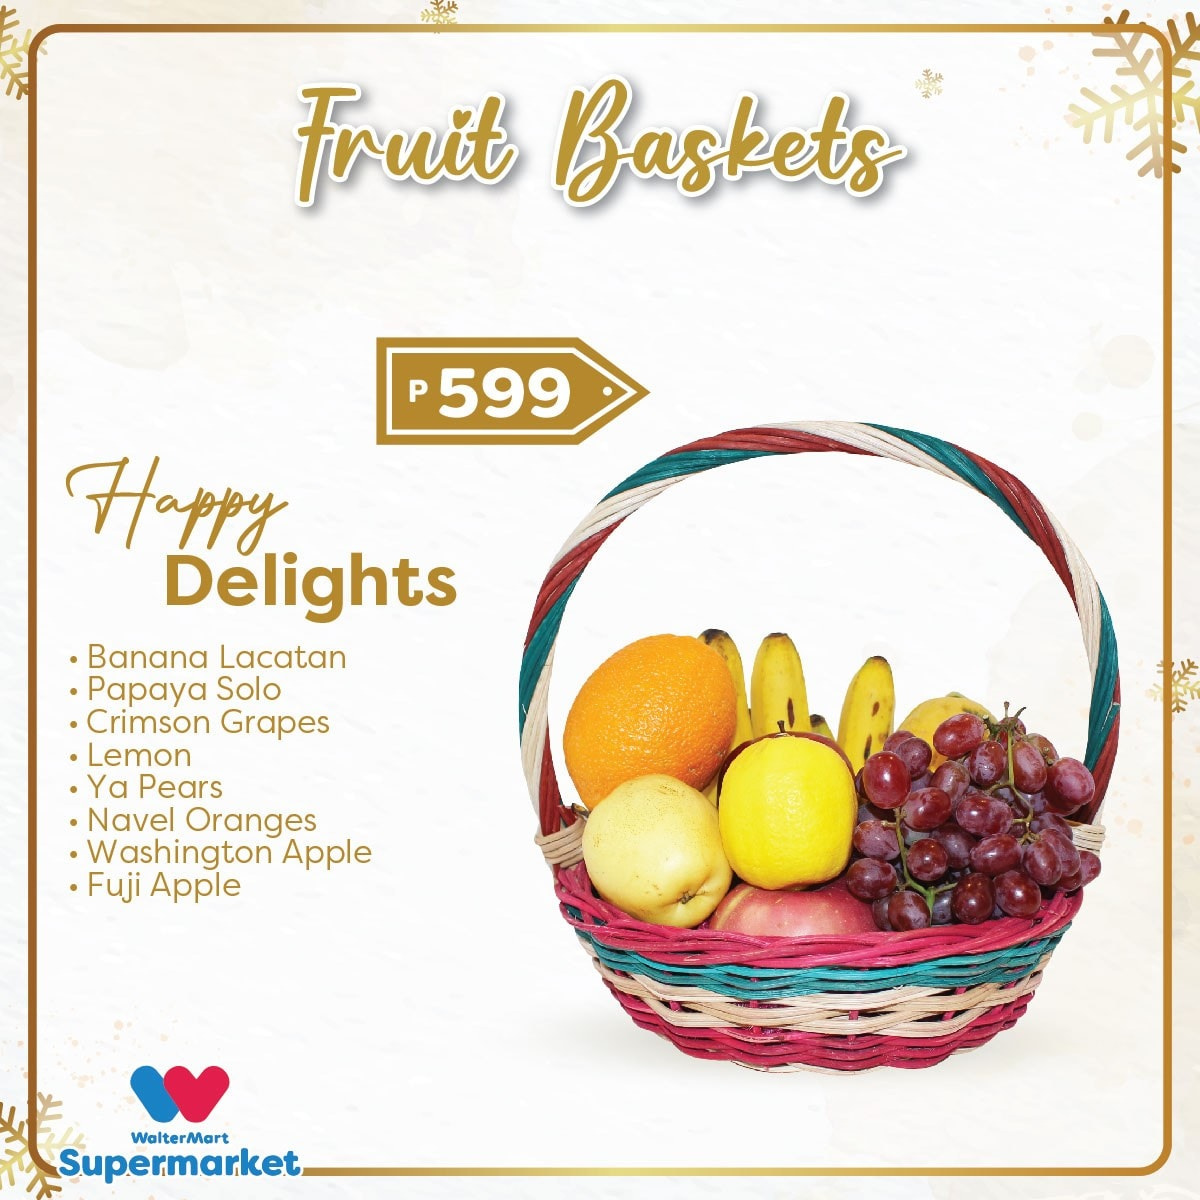 thumbnail - Walter Mart offer  - Sales products - grapes, papaya, pears, Fuji apple, oranges, navel oranges. Page 11.